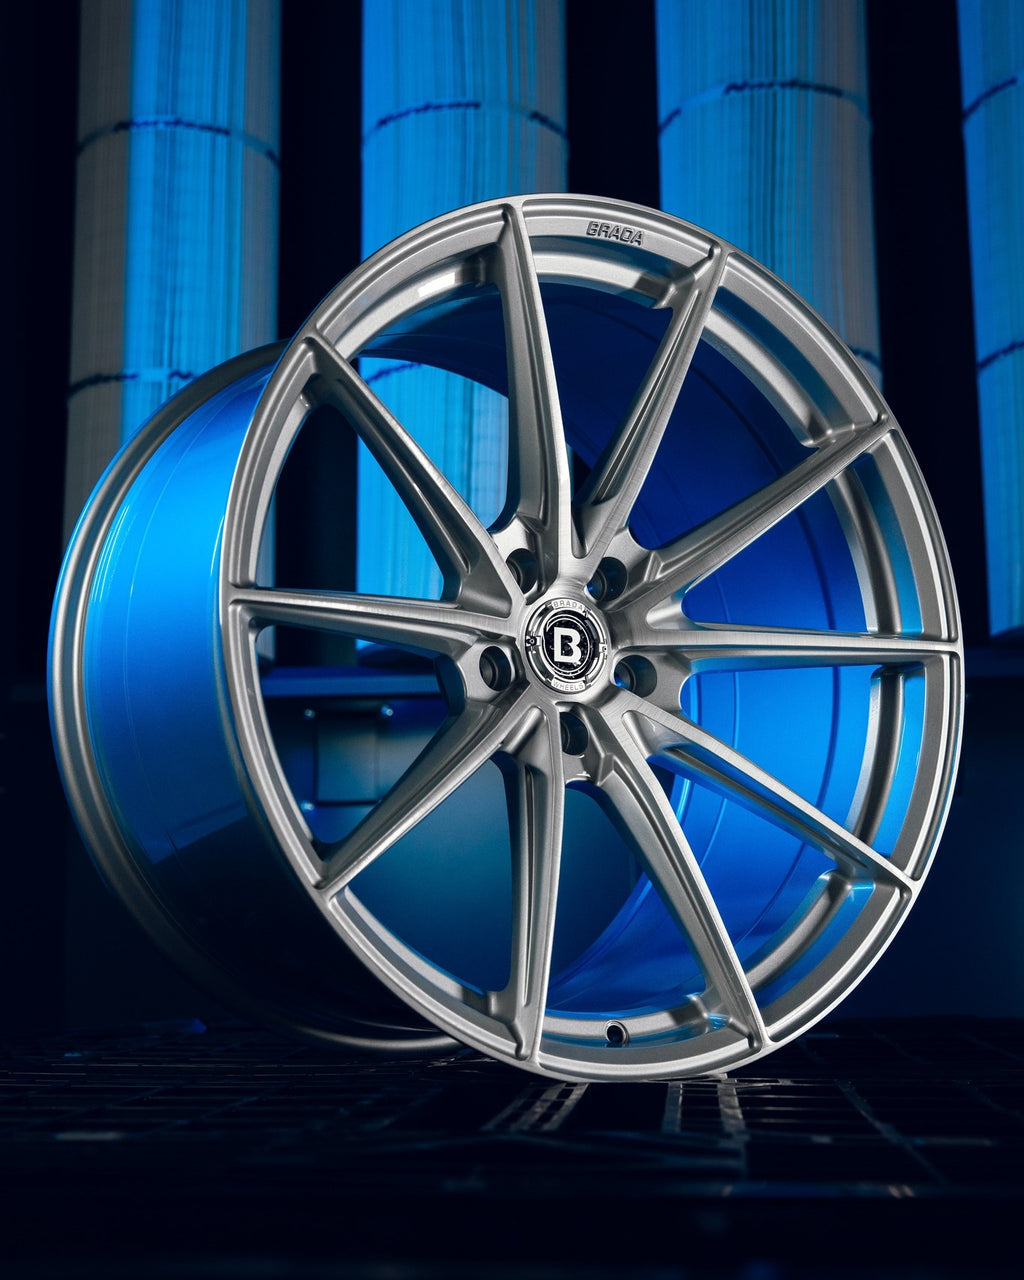 Brada - FormTech Line CX1 Hybrid Rotary Forged Wheel - Toyota A90